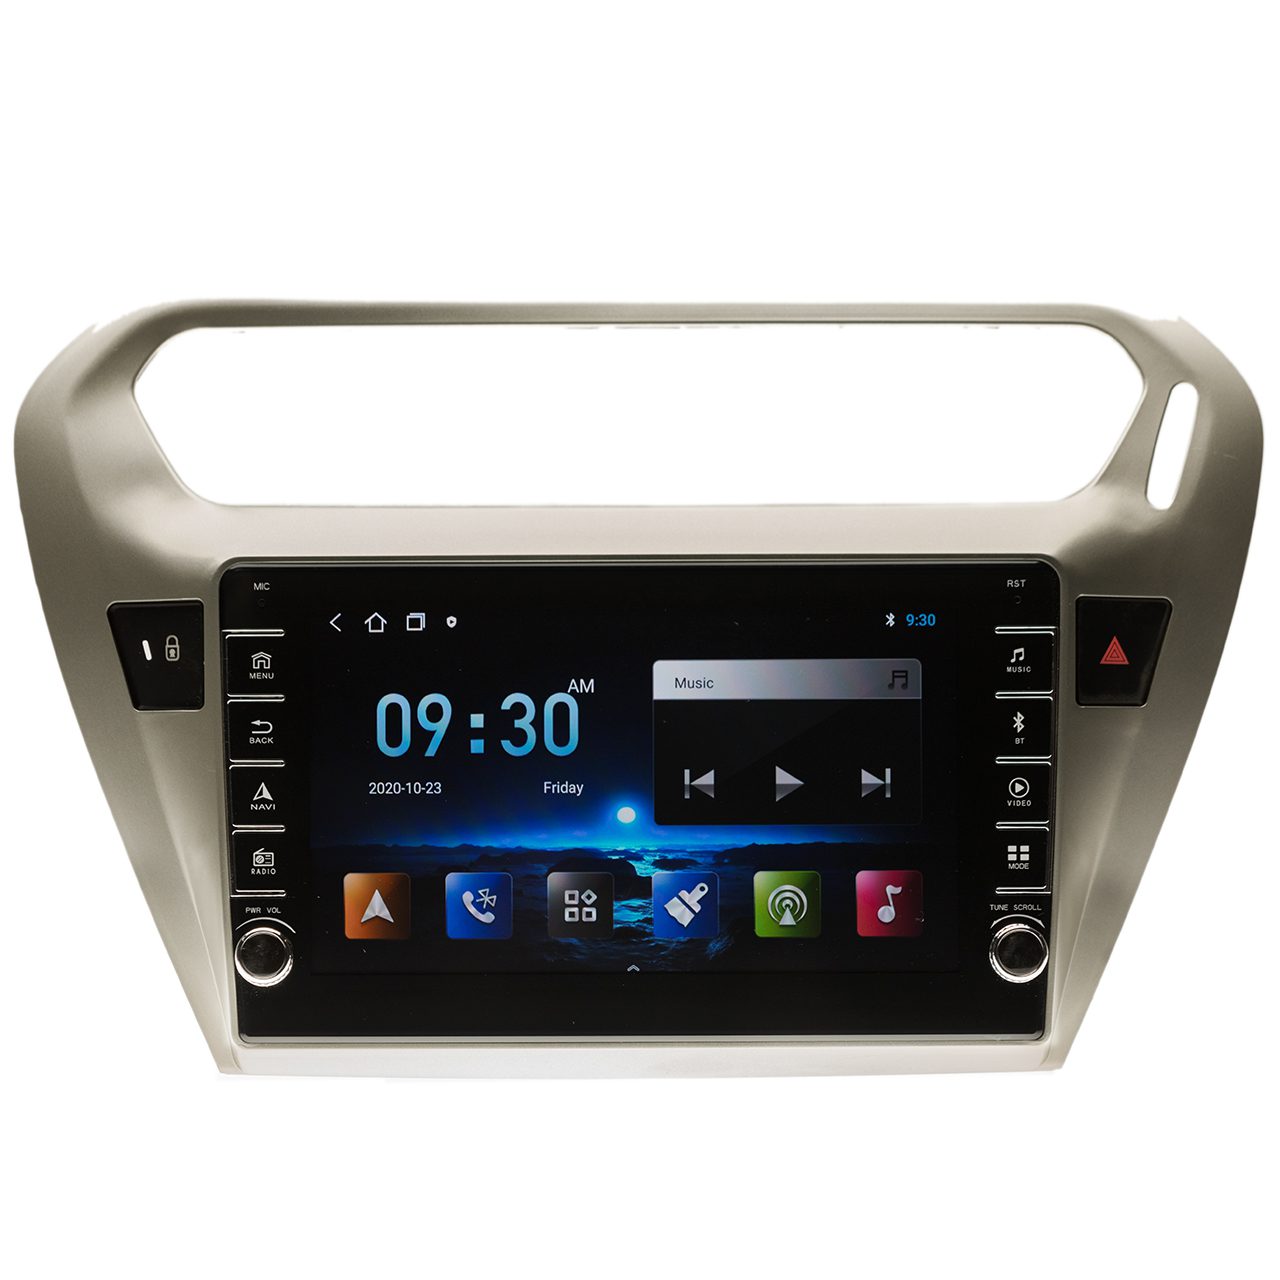 Navigatie AUTONAV Android GPS Dedicata Peugeot 301 2012-2017 si Citroen Elysee, Model PRO Memorie 64GB Stocare, 4GB DDR3 RAM, Butoane Laterale Si Regulator Volum, Display 8